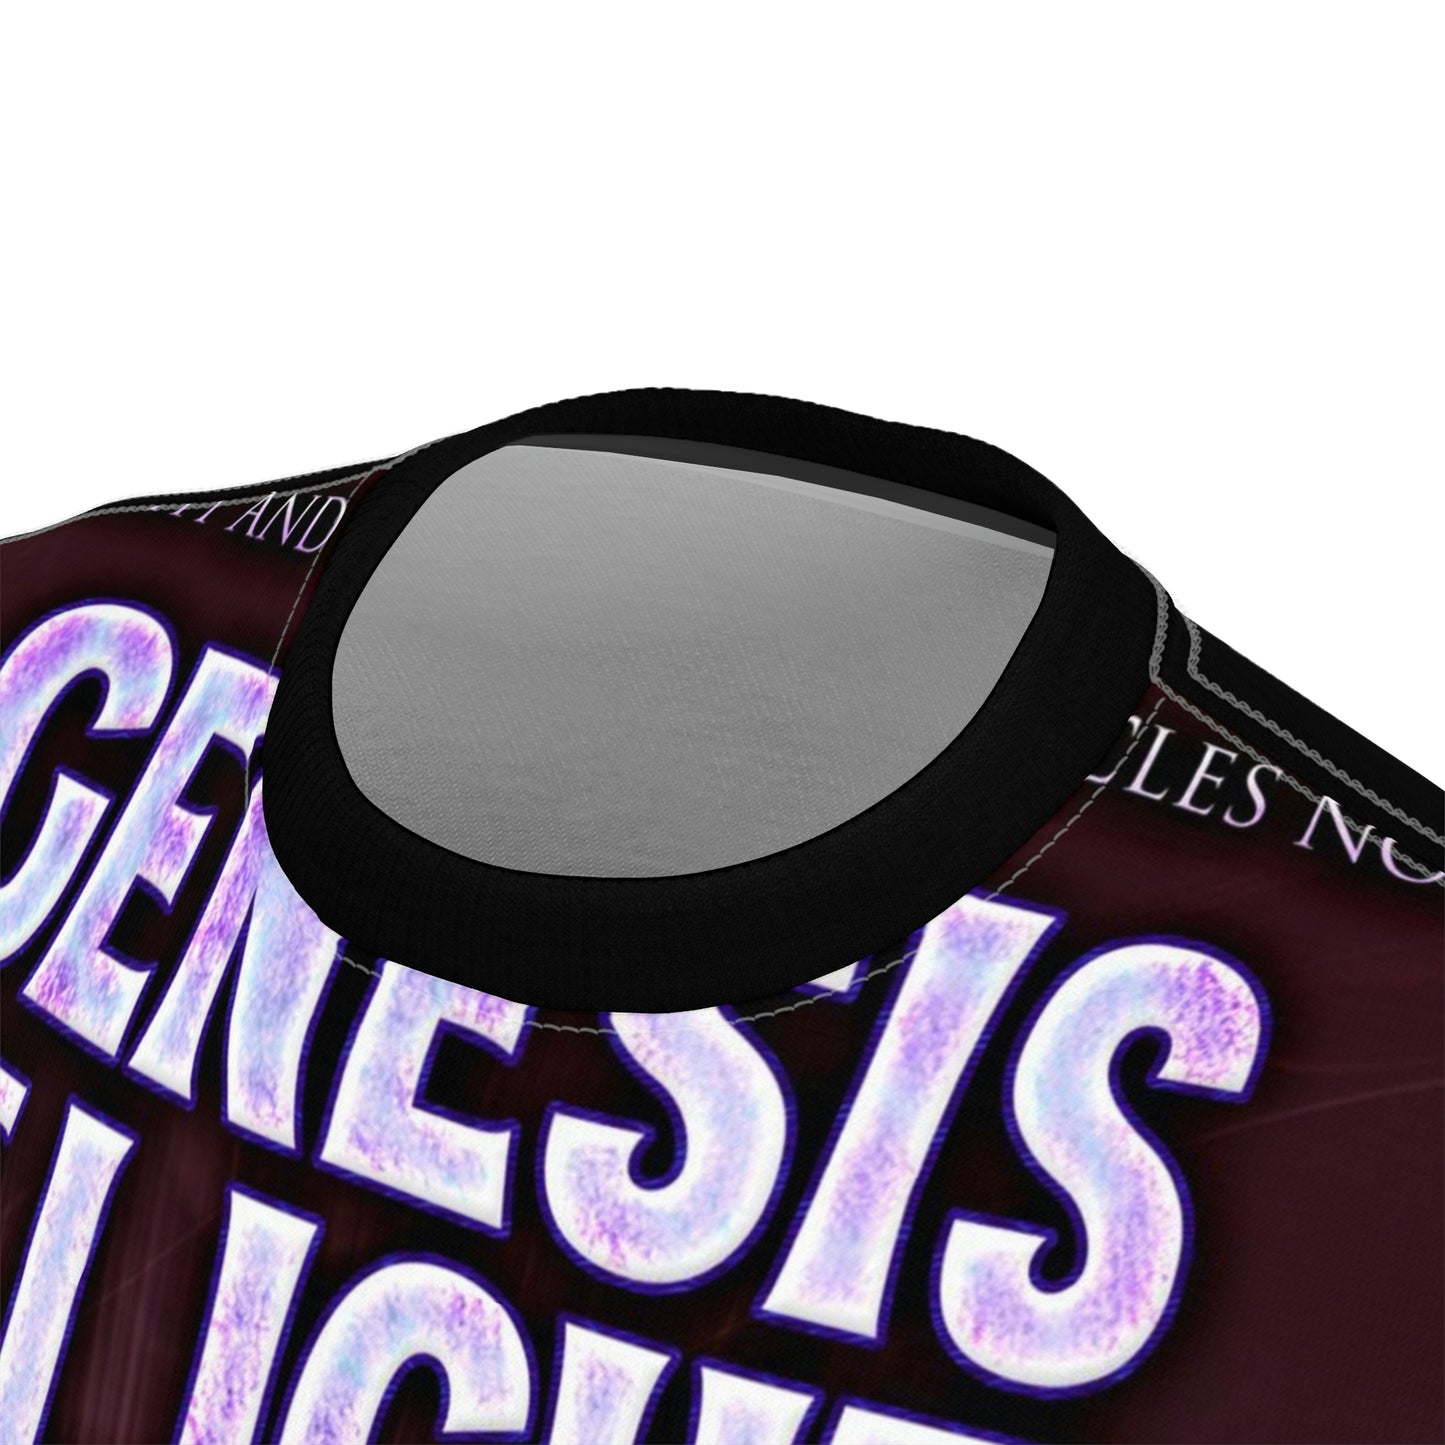 Genesis Of Light - Unisex All-Over Print Cut & Sew T-Shirt